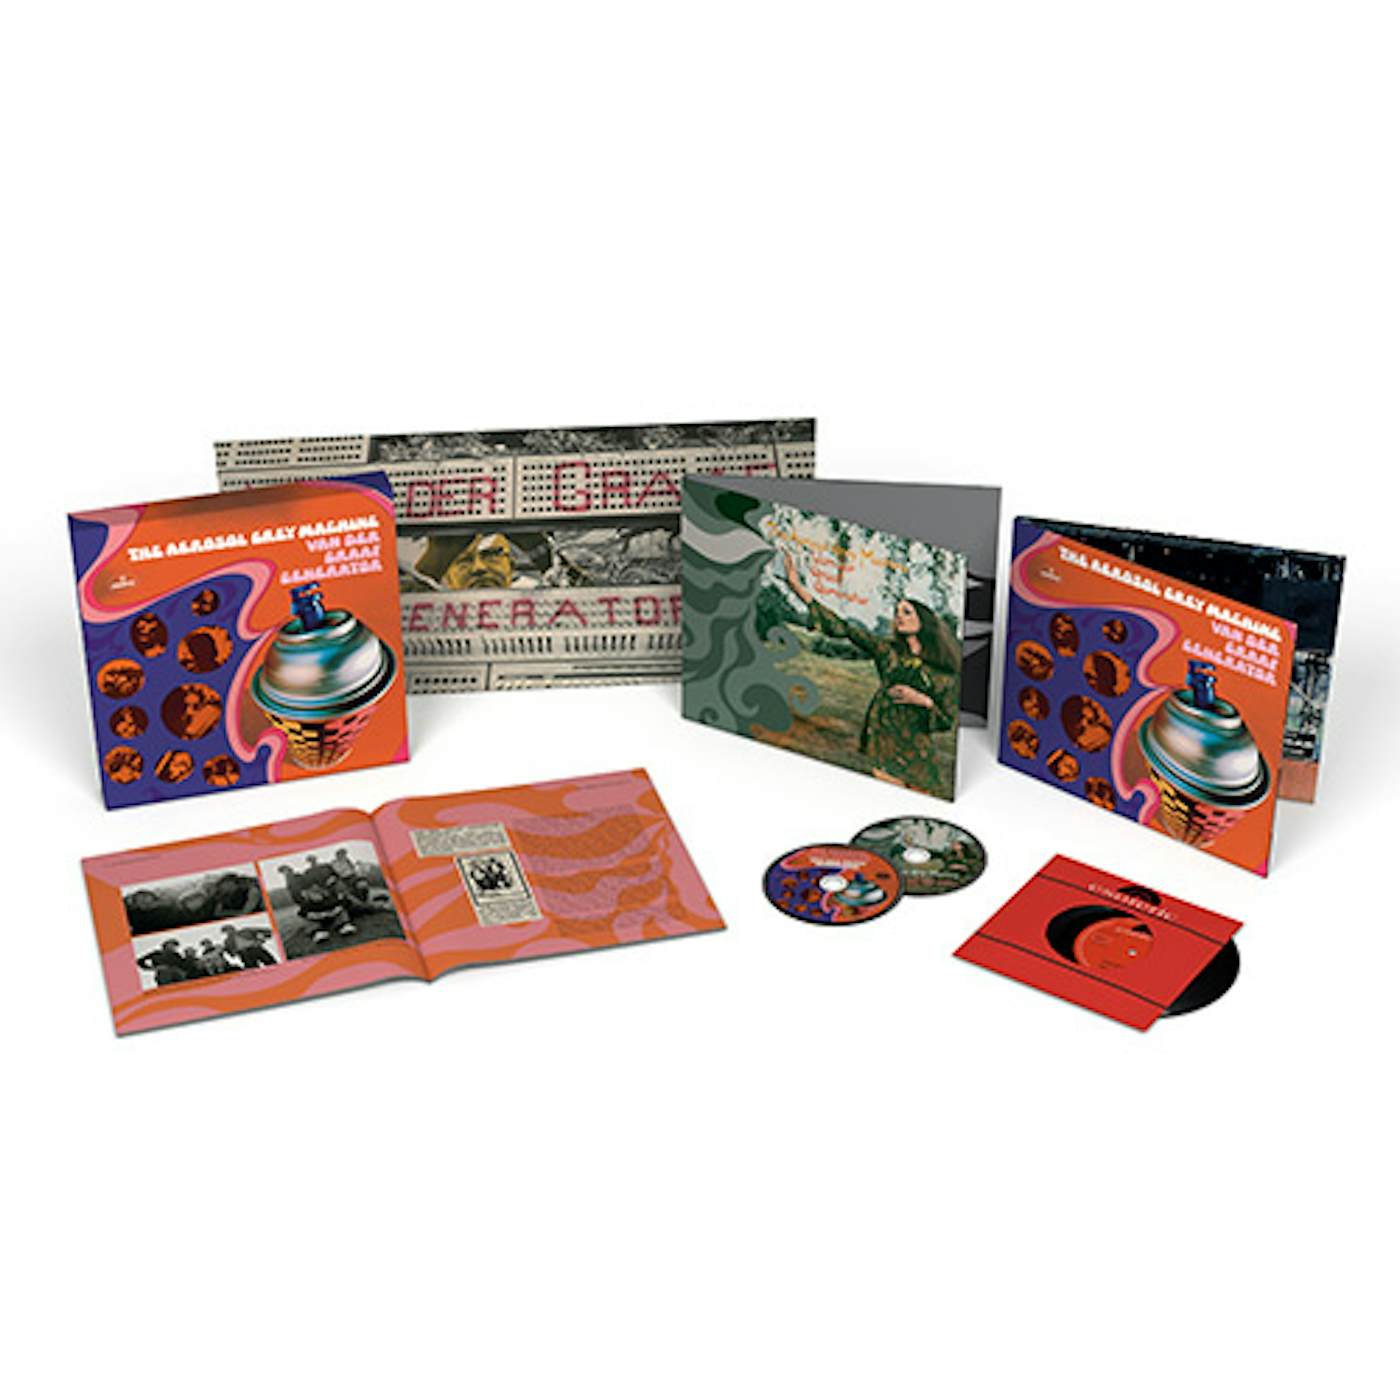 Van Der Graaf Generator AEROSOL GREY MACHINE: 50TH ANNIVERSARY EDITION CD